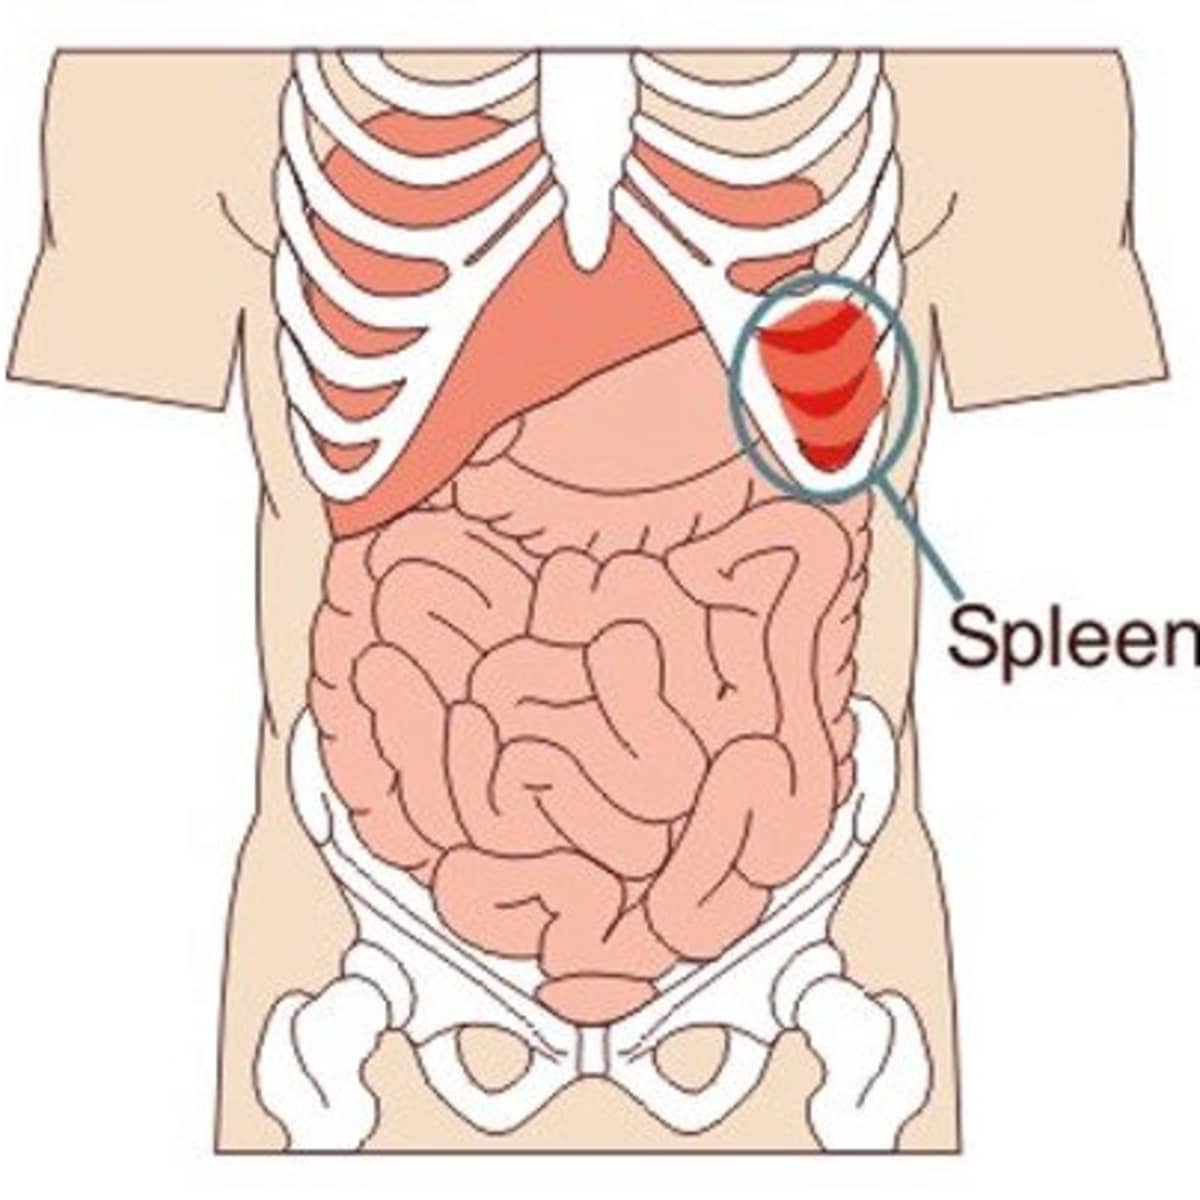 Spleen: Function, Location & Problems